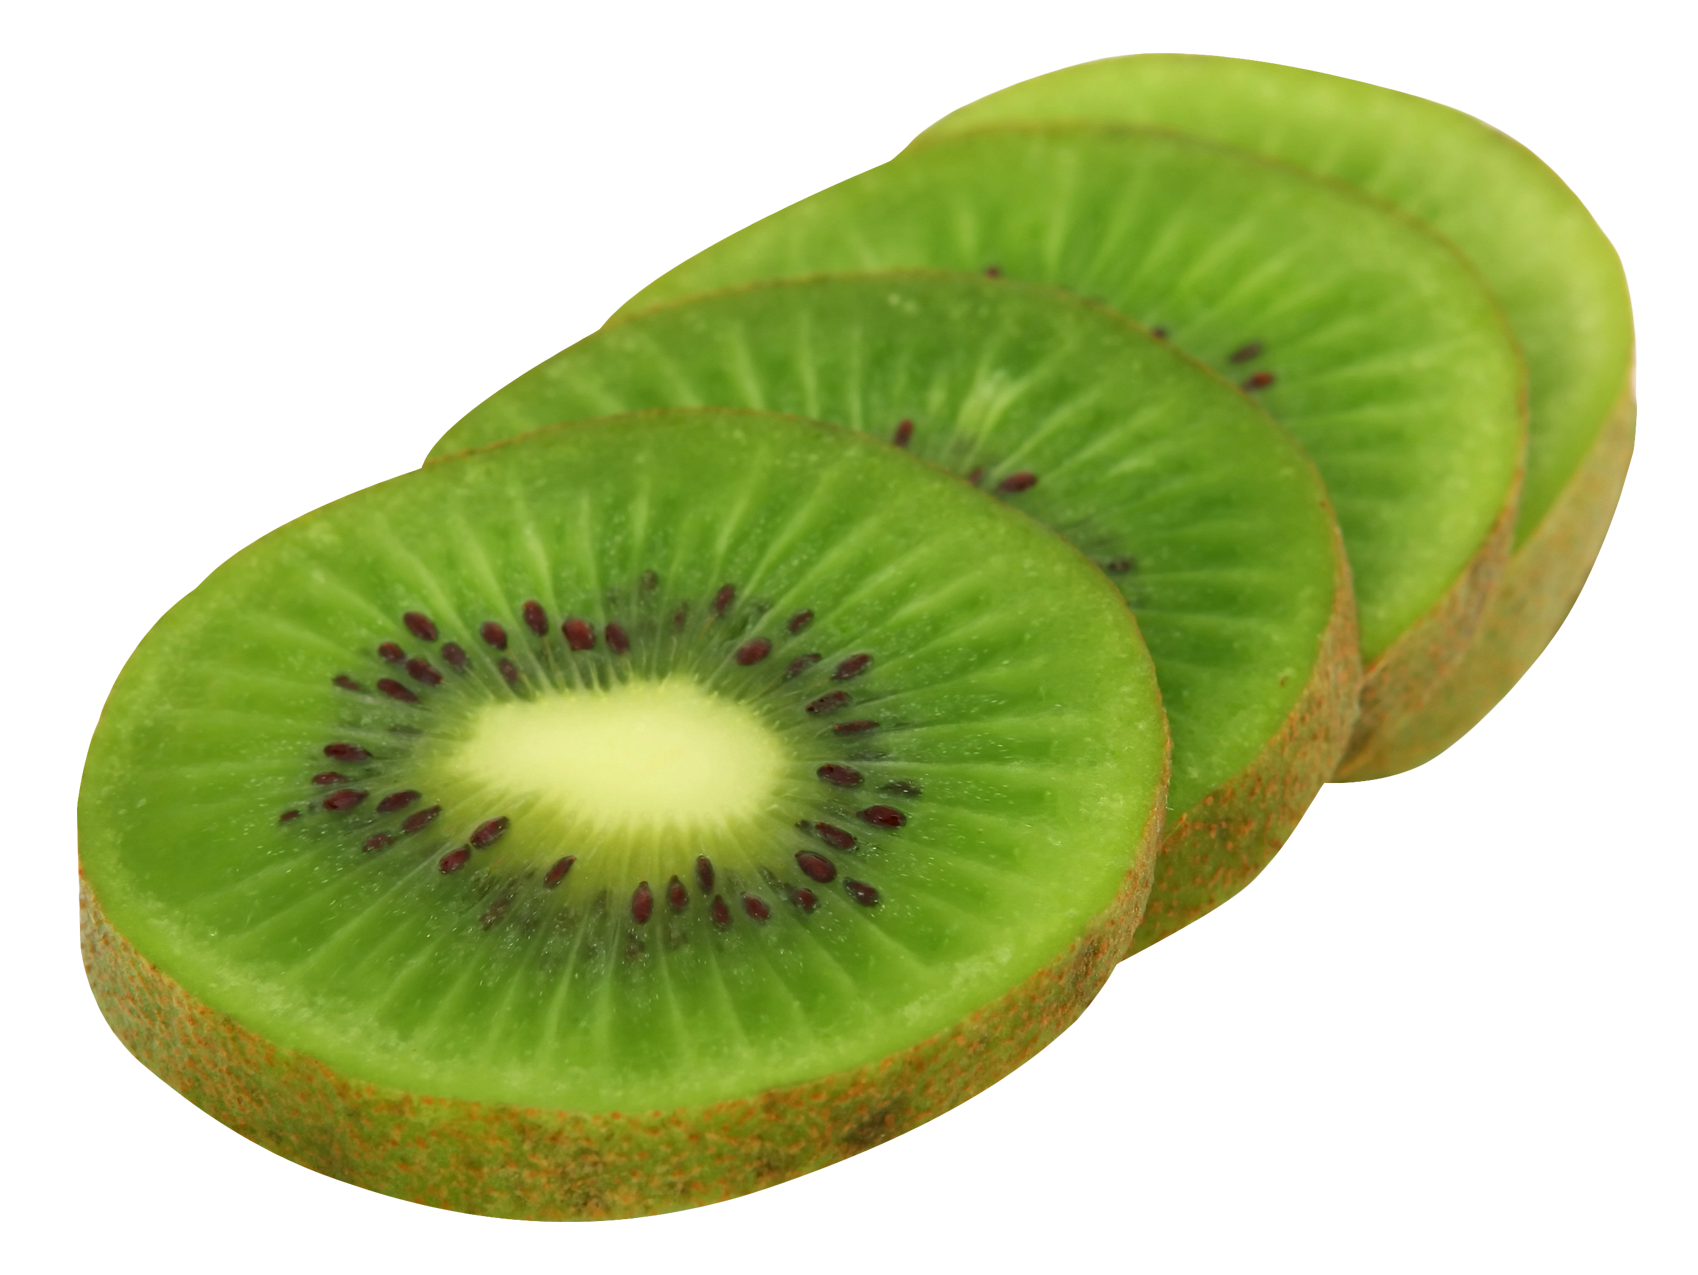 Kiwi Fruit Slice PNG Image - PurePNG | Free transparent CC0 PNG ...